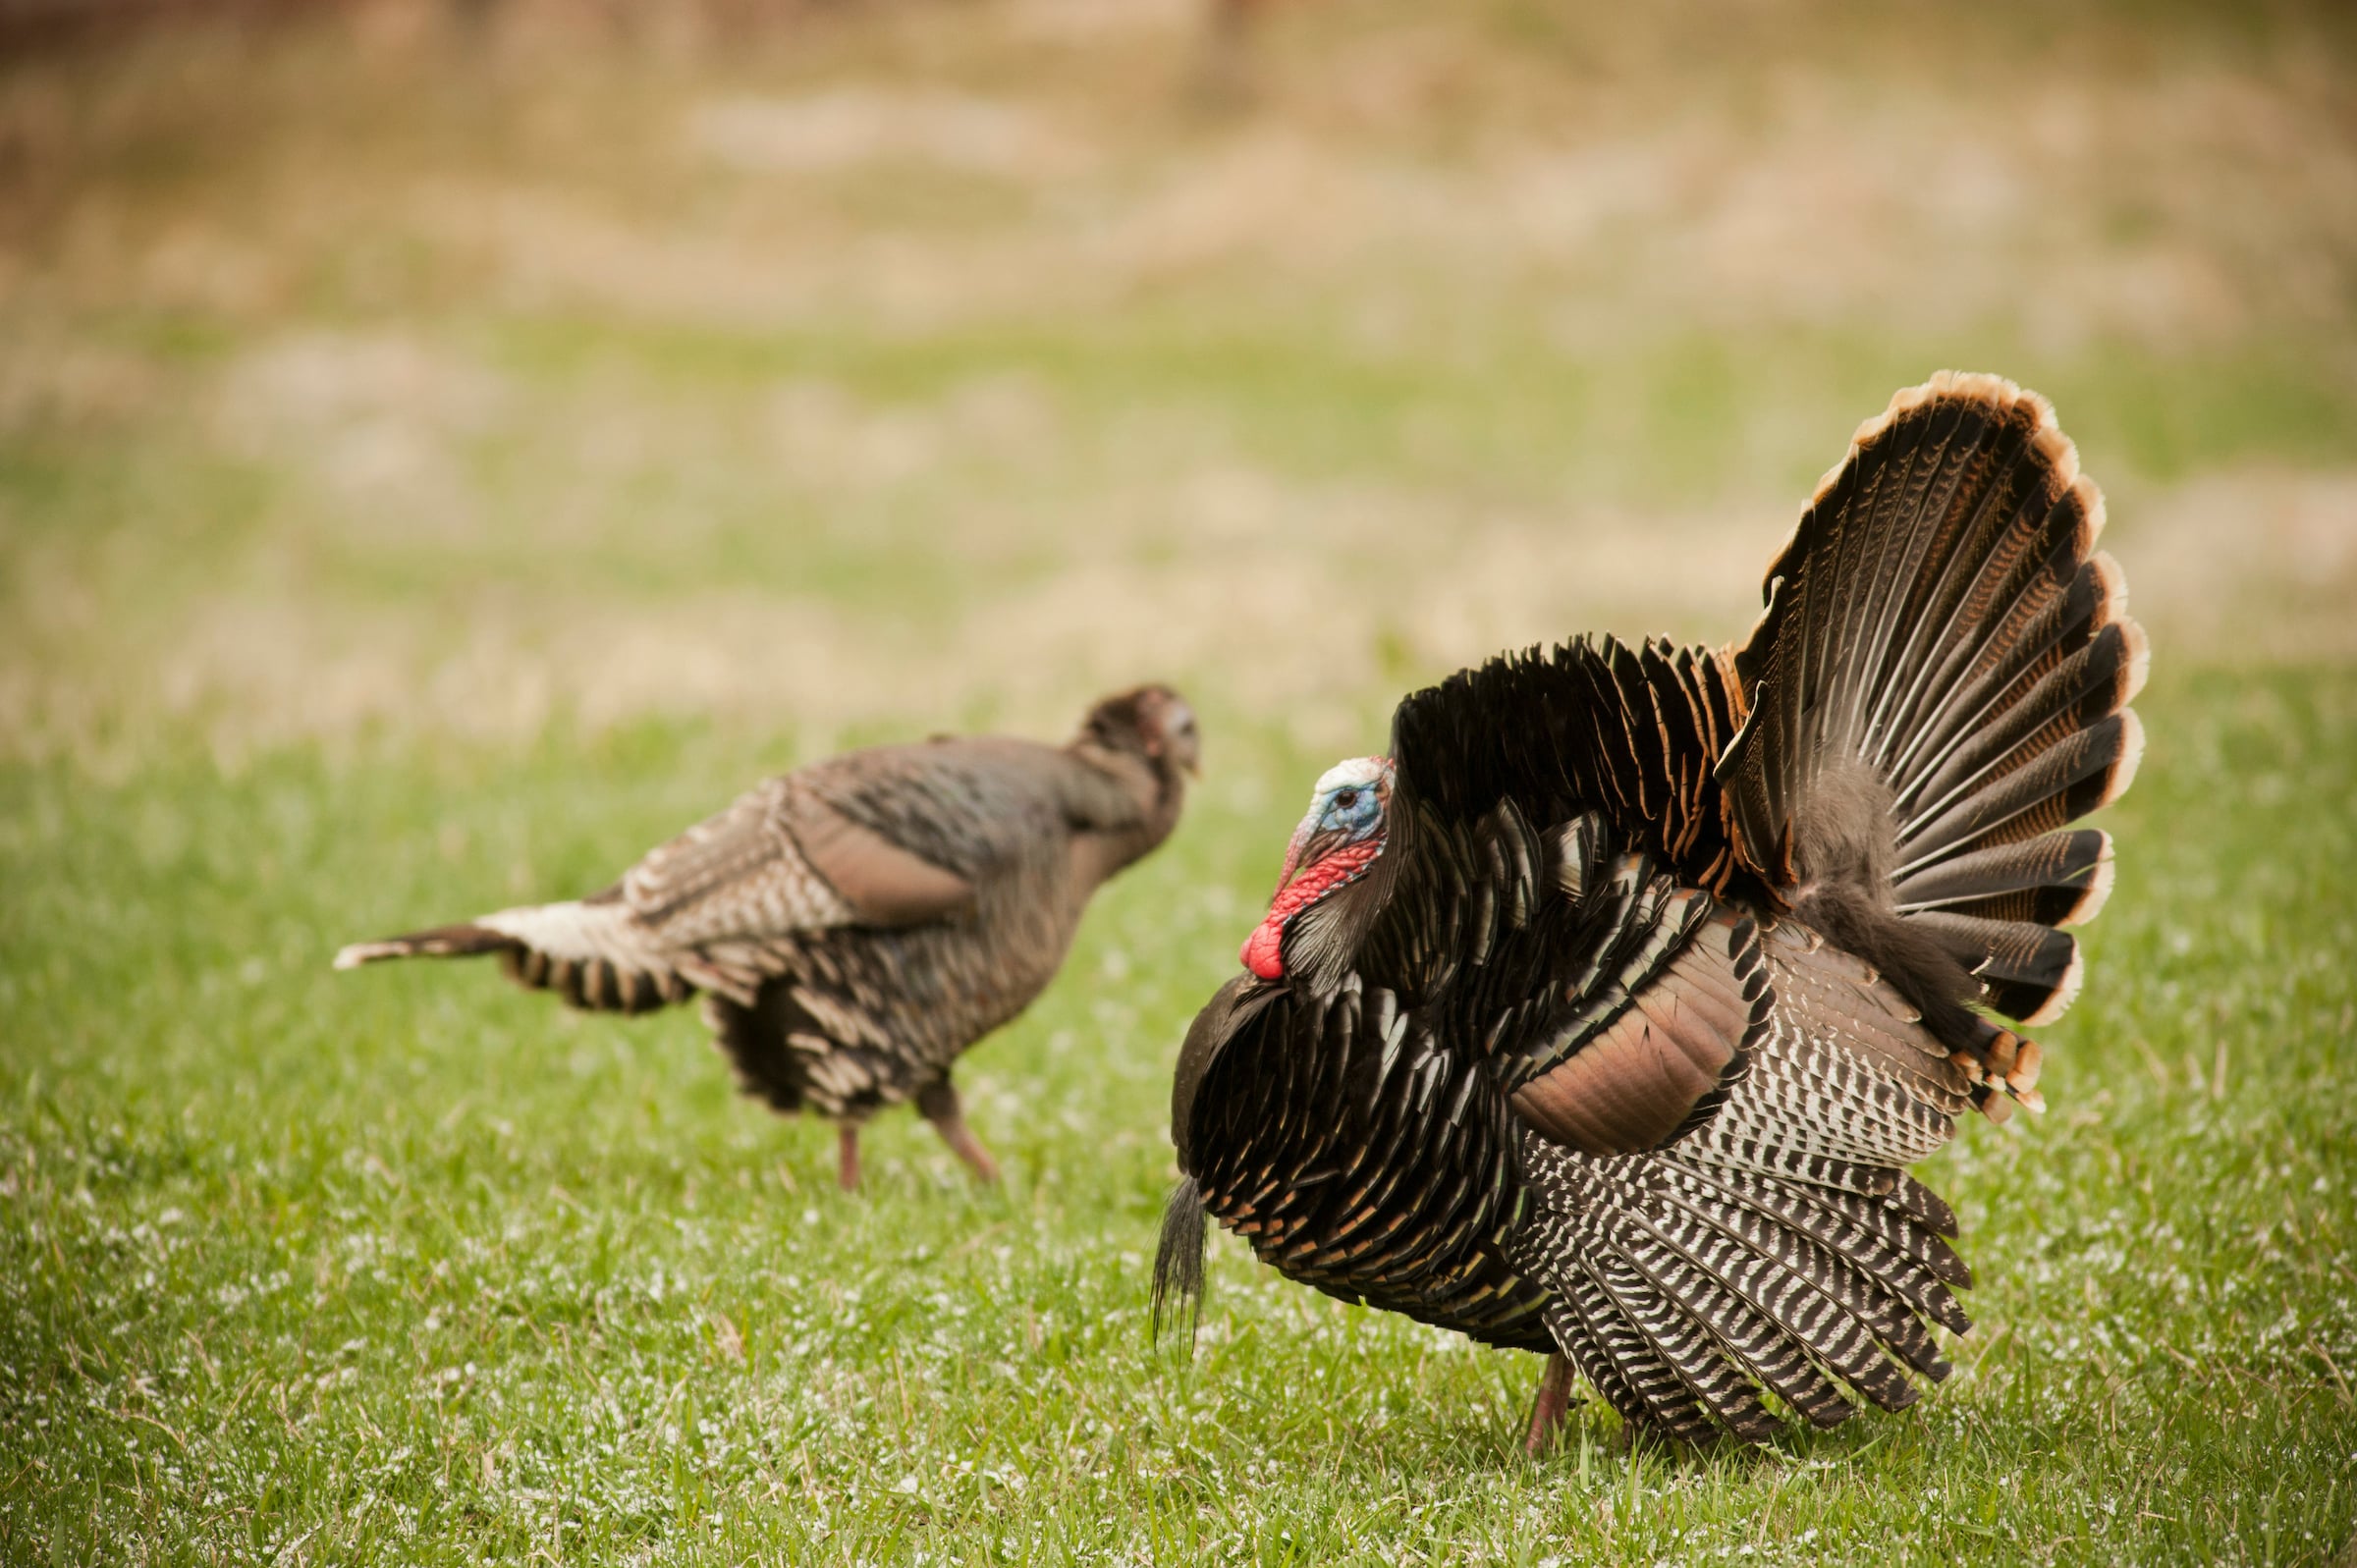 Use aggressive spring turkey hunting tactics to fill tags this season.